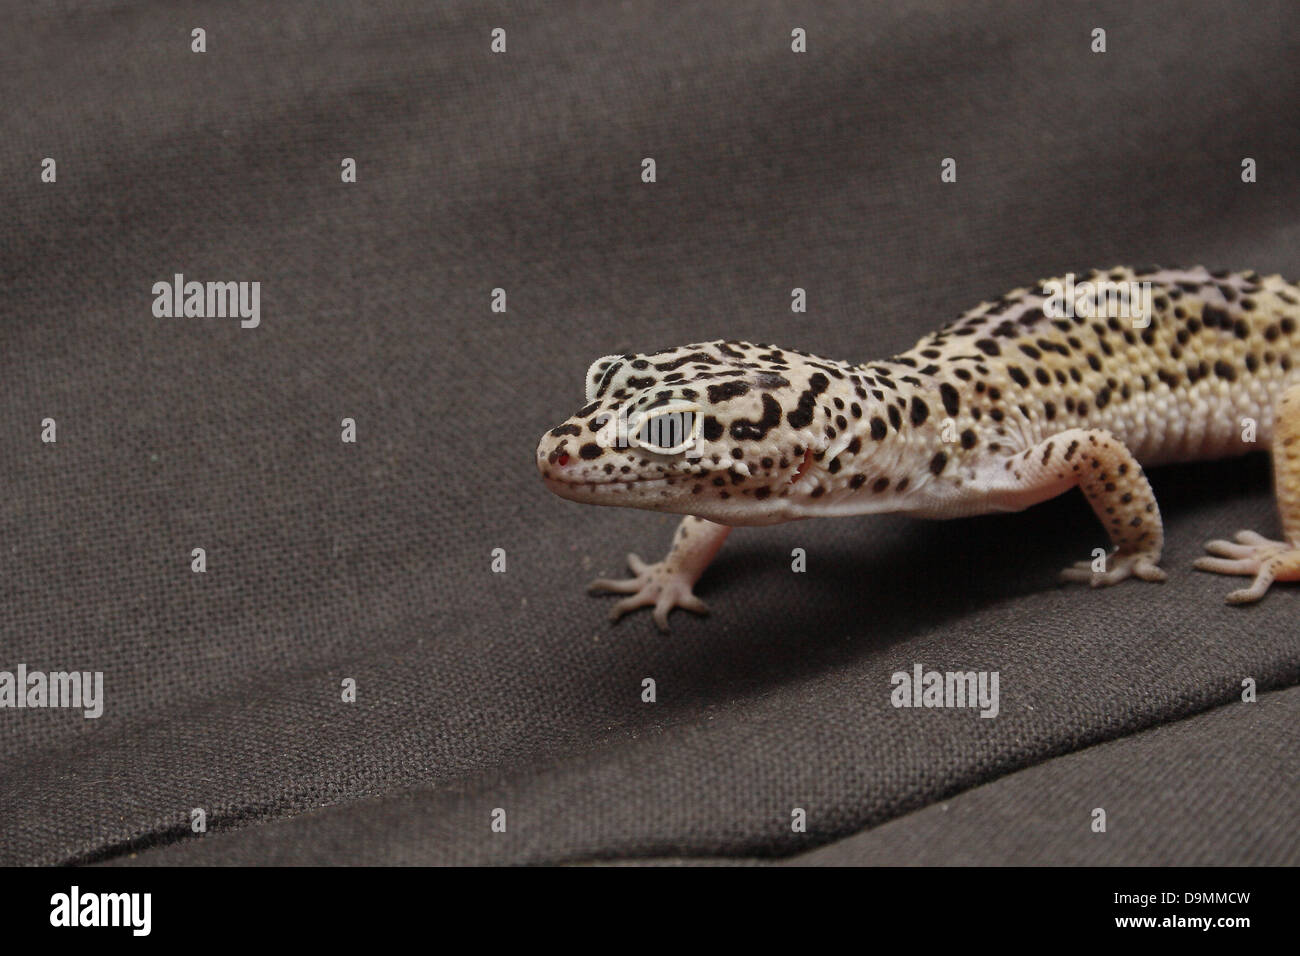 leopard gecko crawling on black fabric Eublepharis macularius Stock Photo